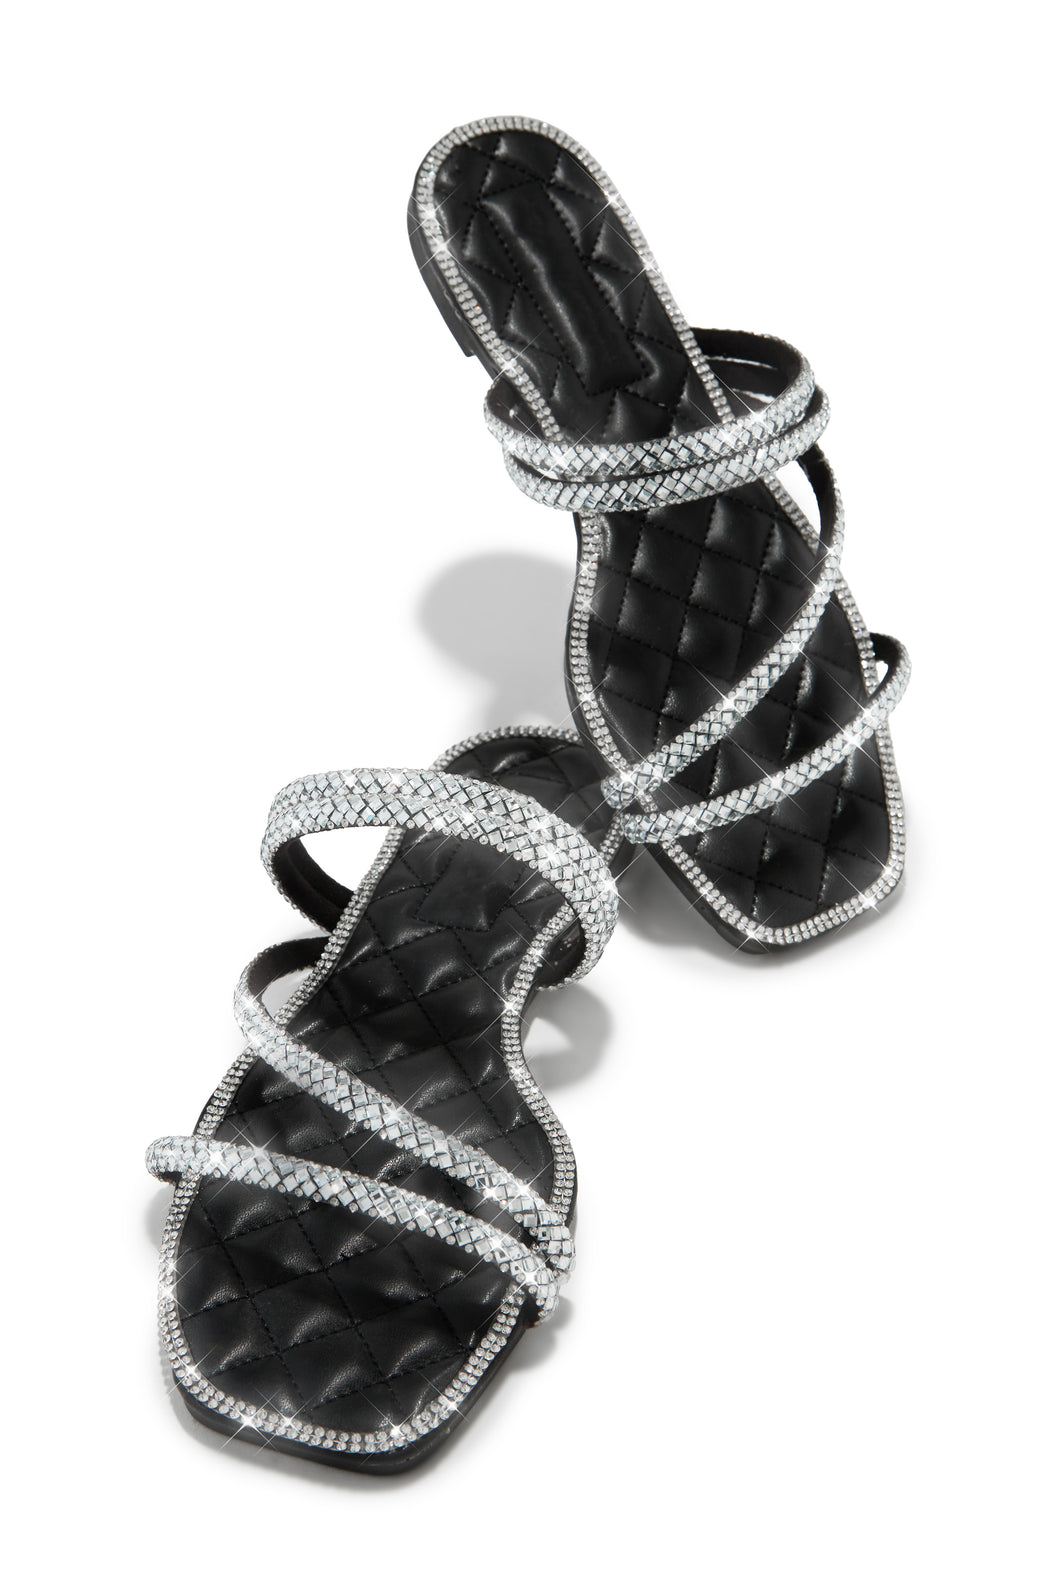 Embellished Black and Silver PU Sandals